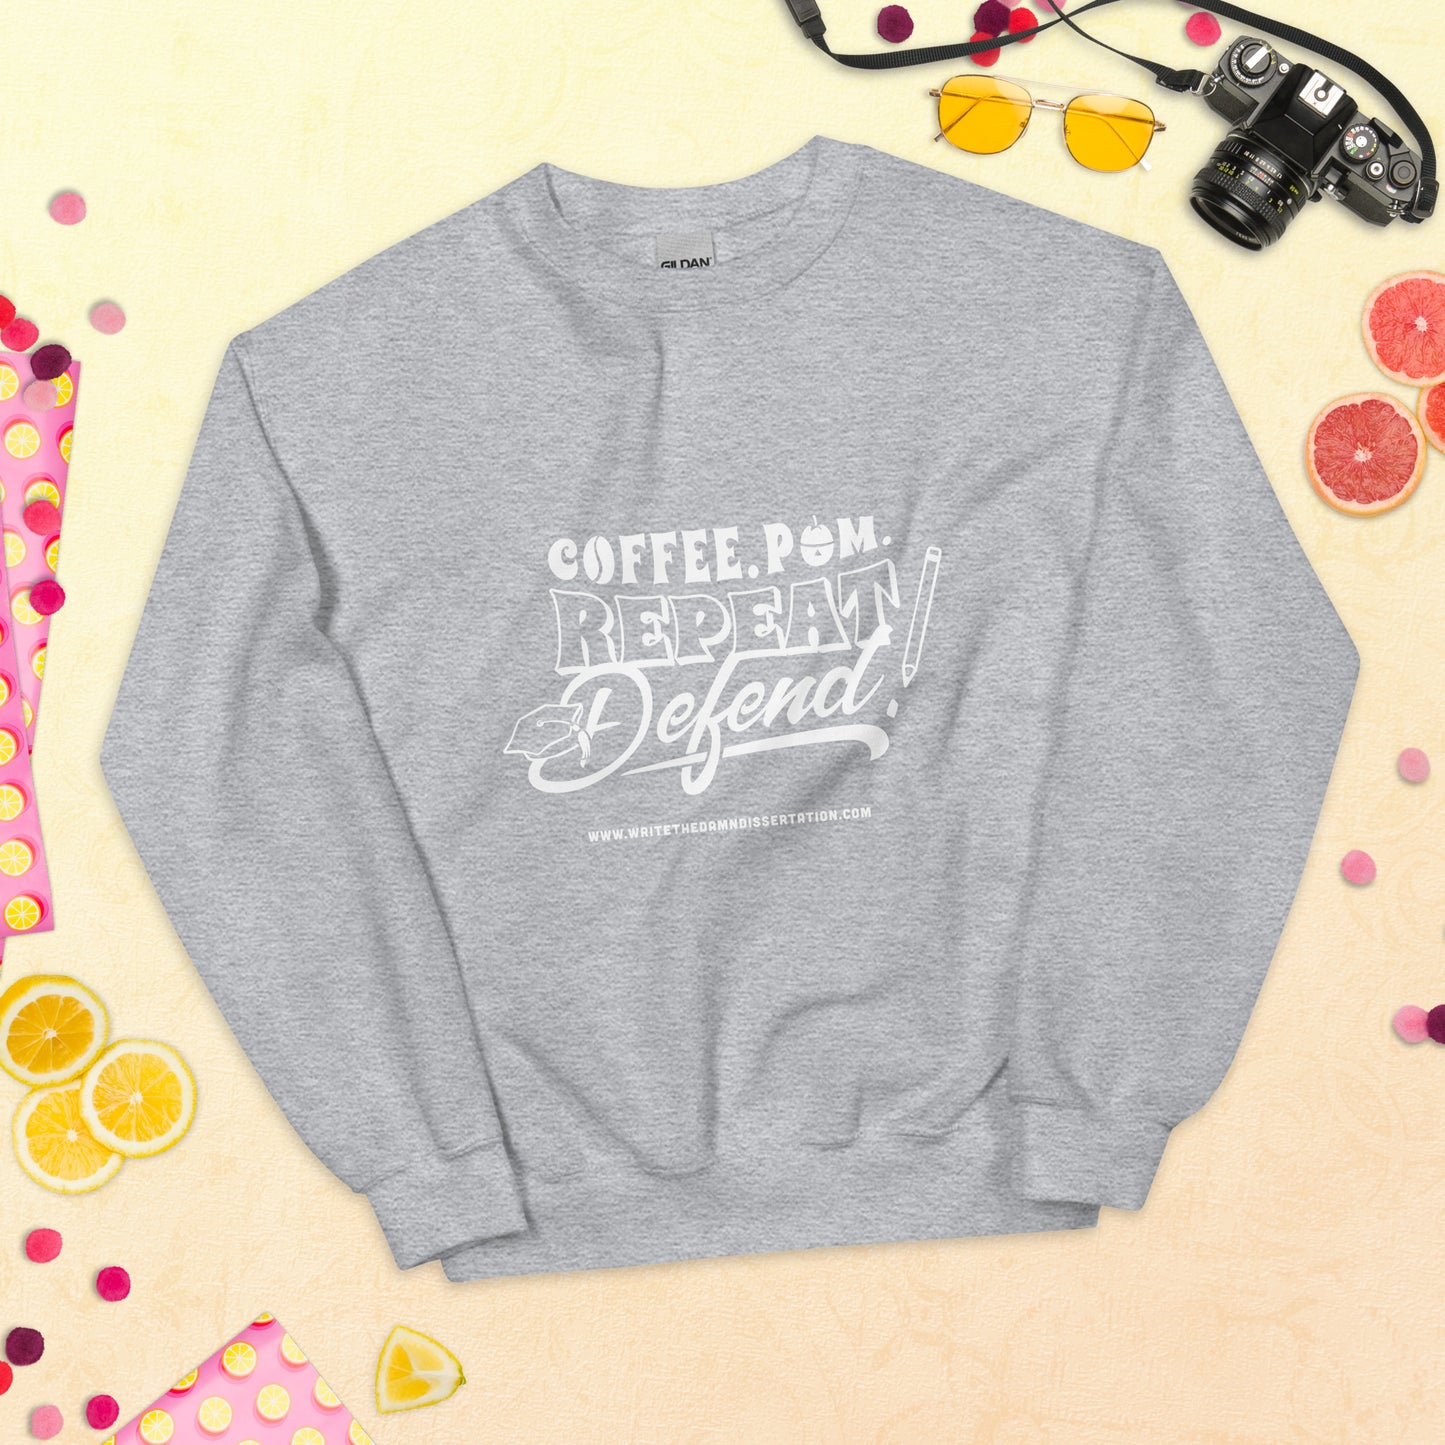 Coffee.Pom.Repeat.Defend! Unisex Sweatshirt